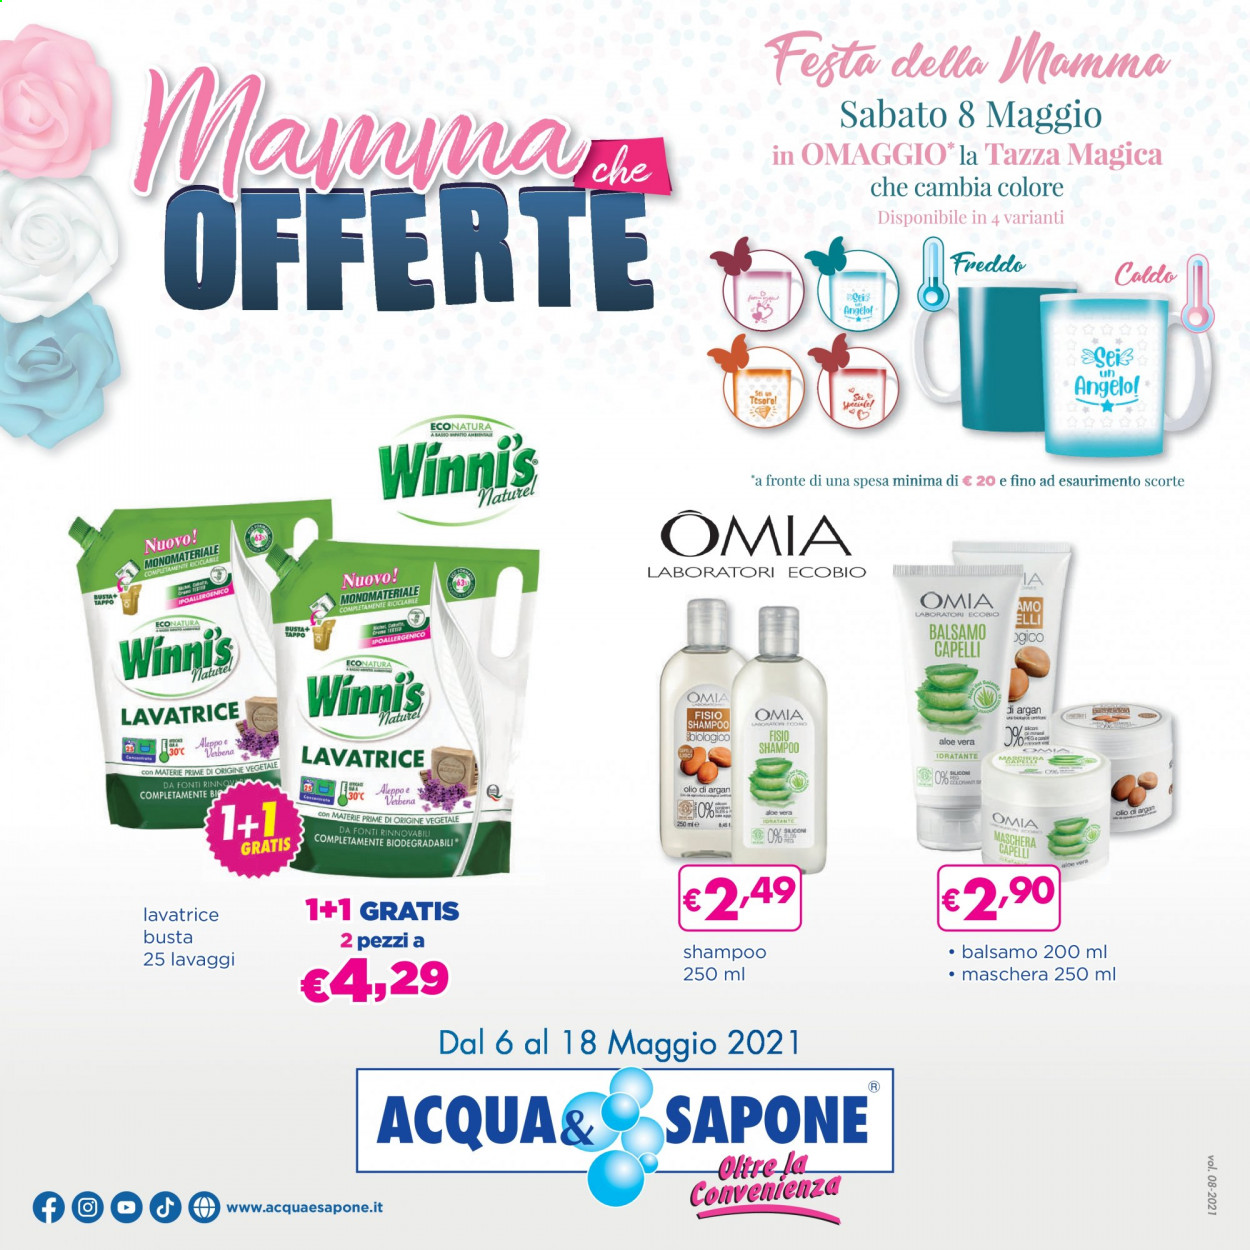 thumbnail - Volantino Acqua & Sapone - 6/5/2021 - 18/5/2021 - Prodotti in offerta - Winni's, sapone, Omia, shampoo bio, balsamo, maschera, shampoo, maschera capelli, angelo. Pagina 1.